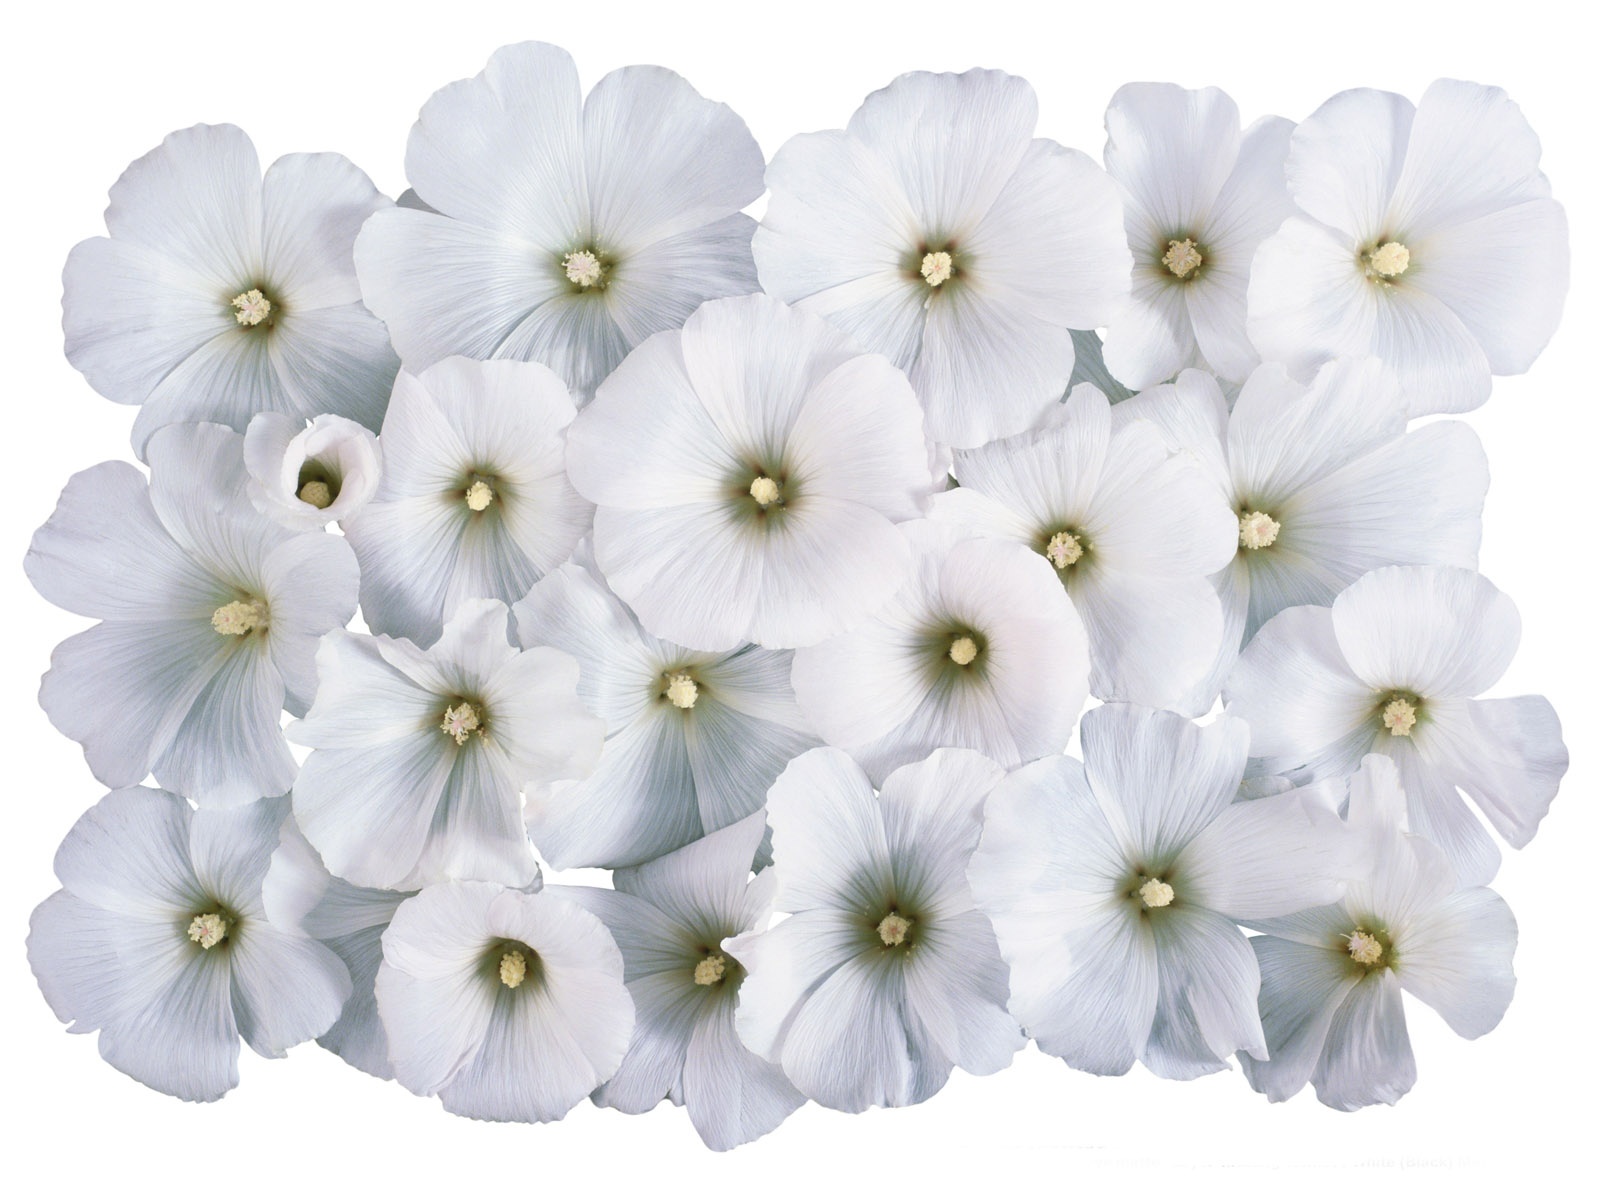 Snow-white flowers wallpaper #4 - 1600x1200